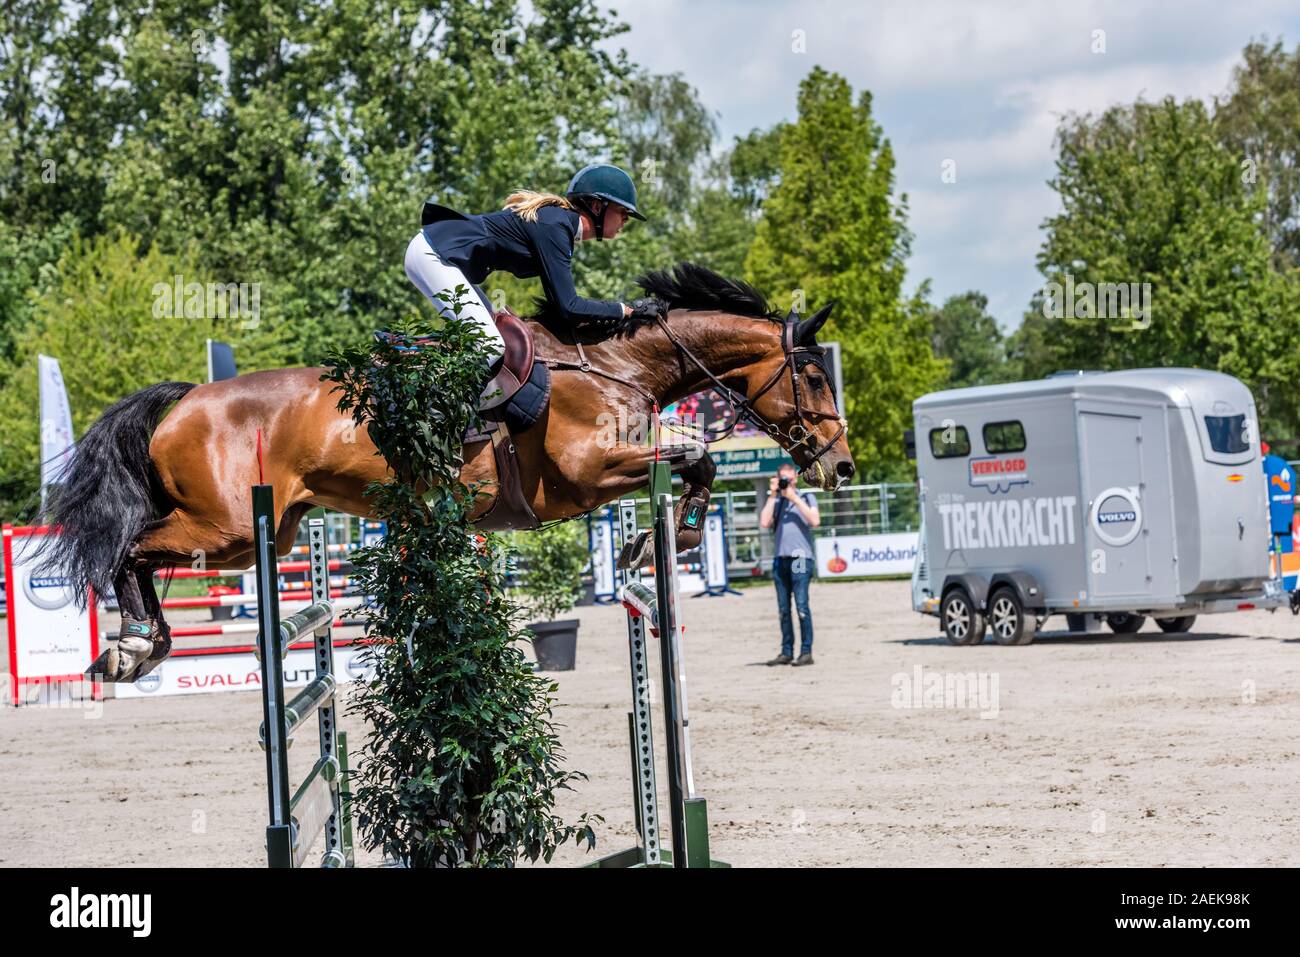 Haarlemmermeer Holland June 19 2019 concours hippique horseback jumping Stock Photo